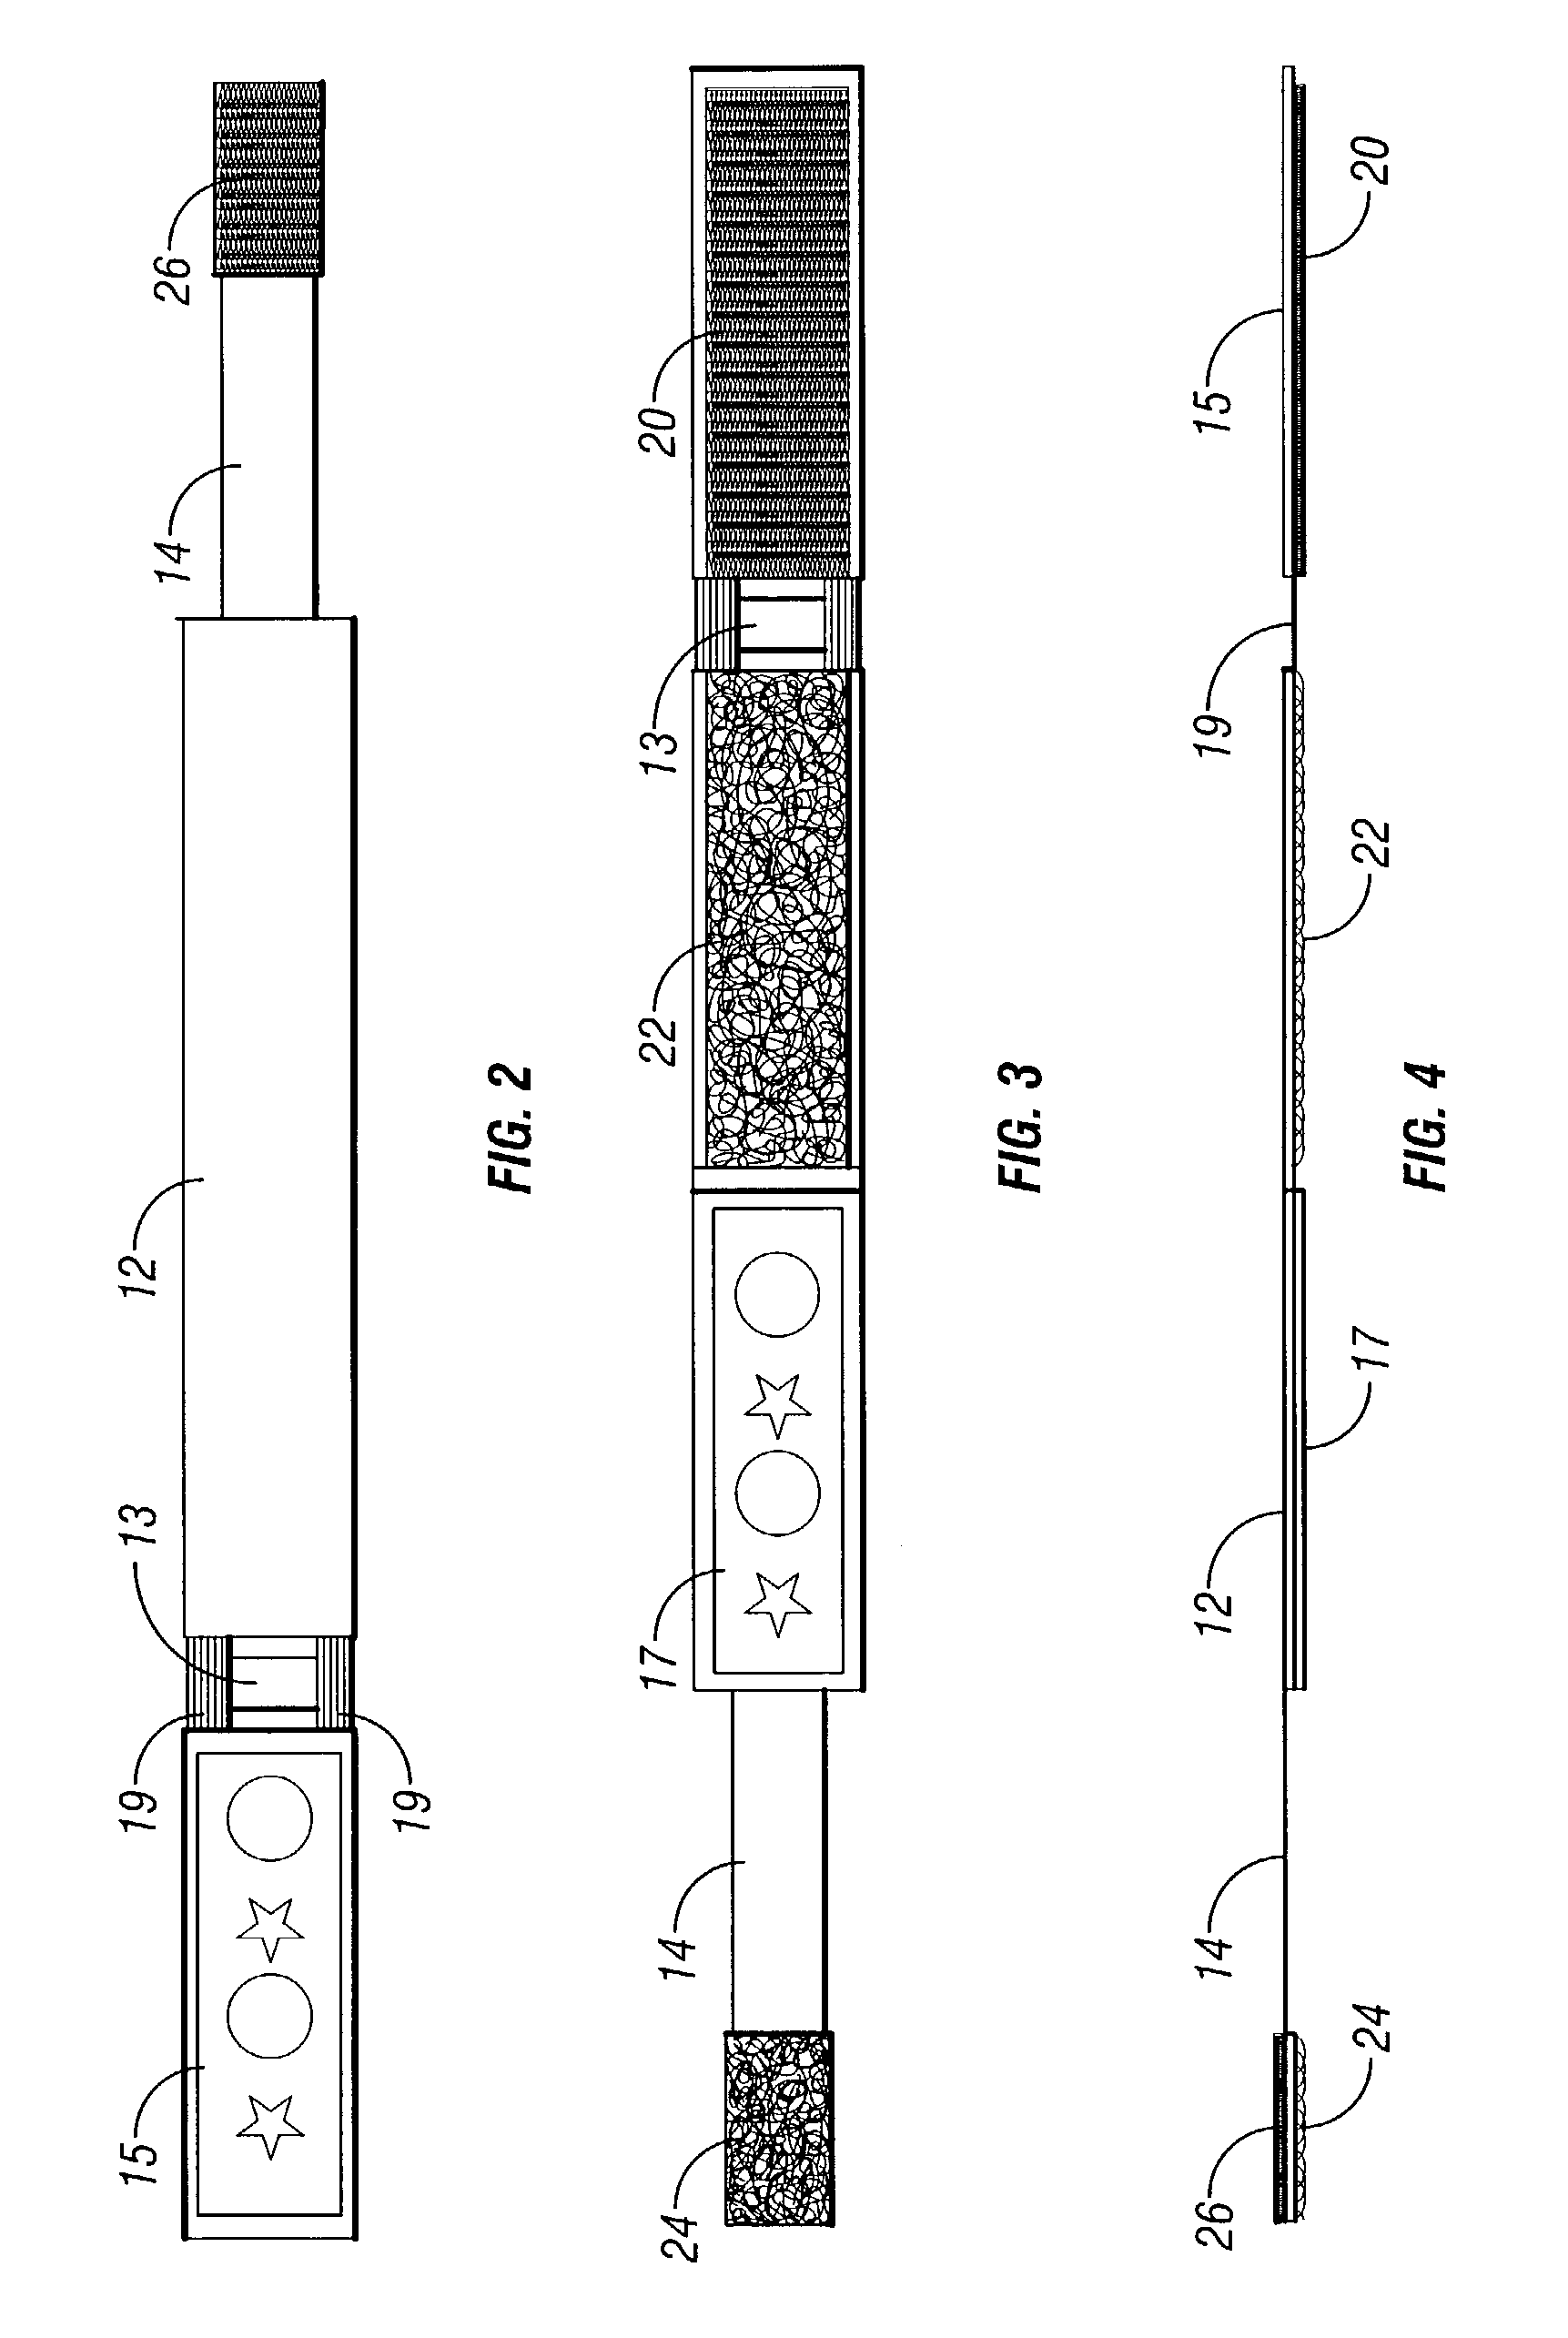 Dual adjustable strap apparatus and method